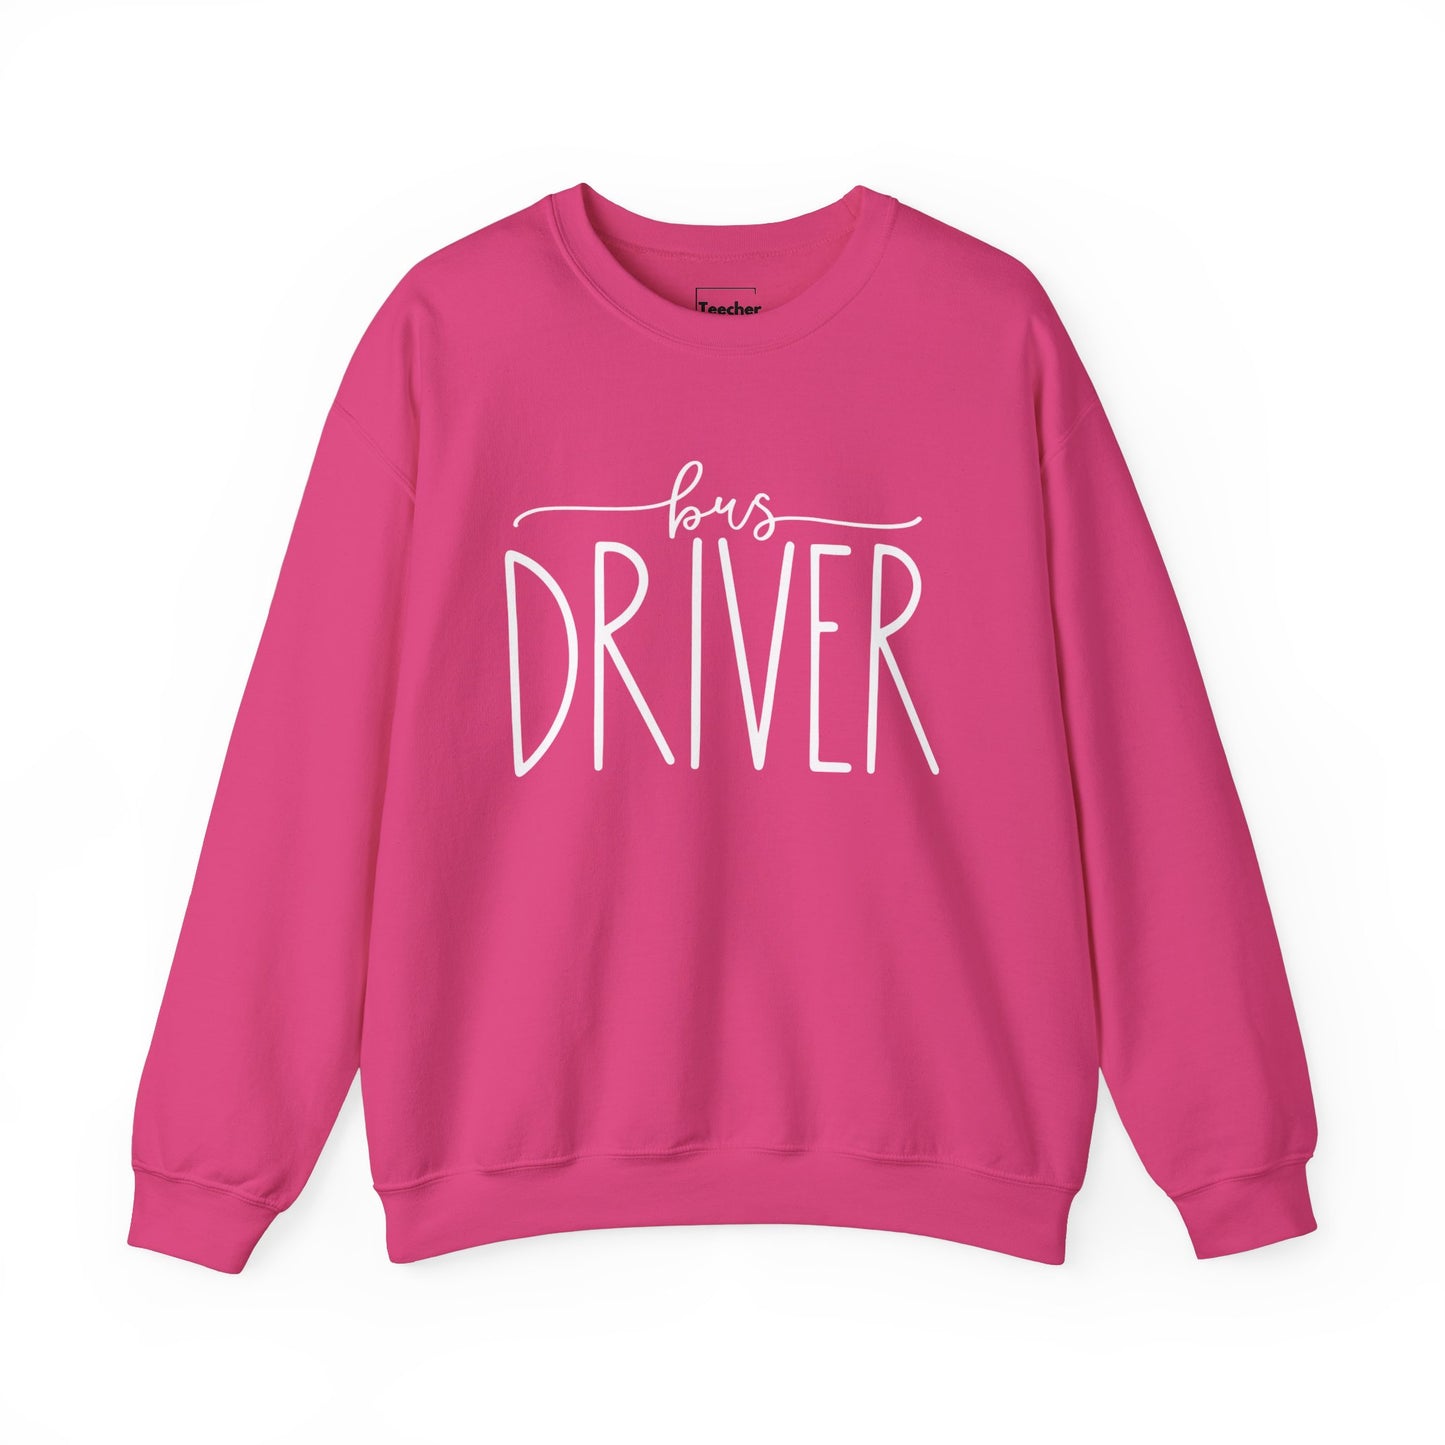 Driver Sweatshirt